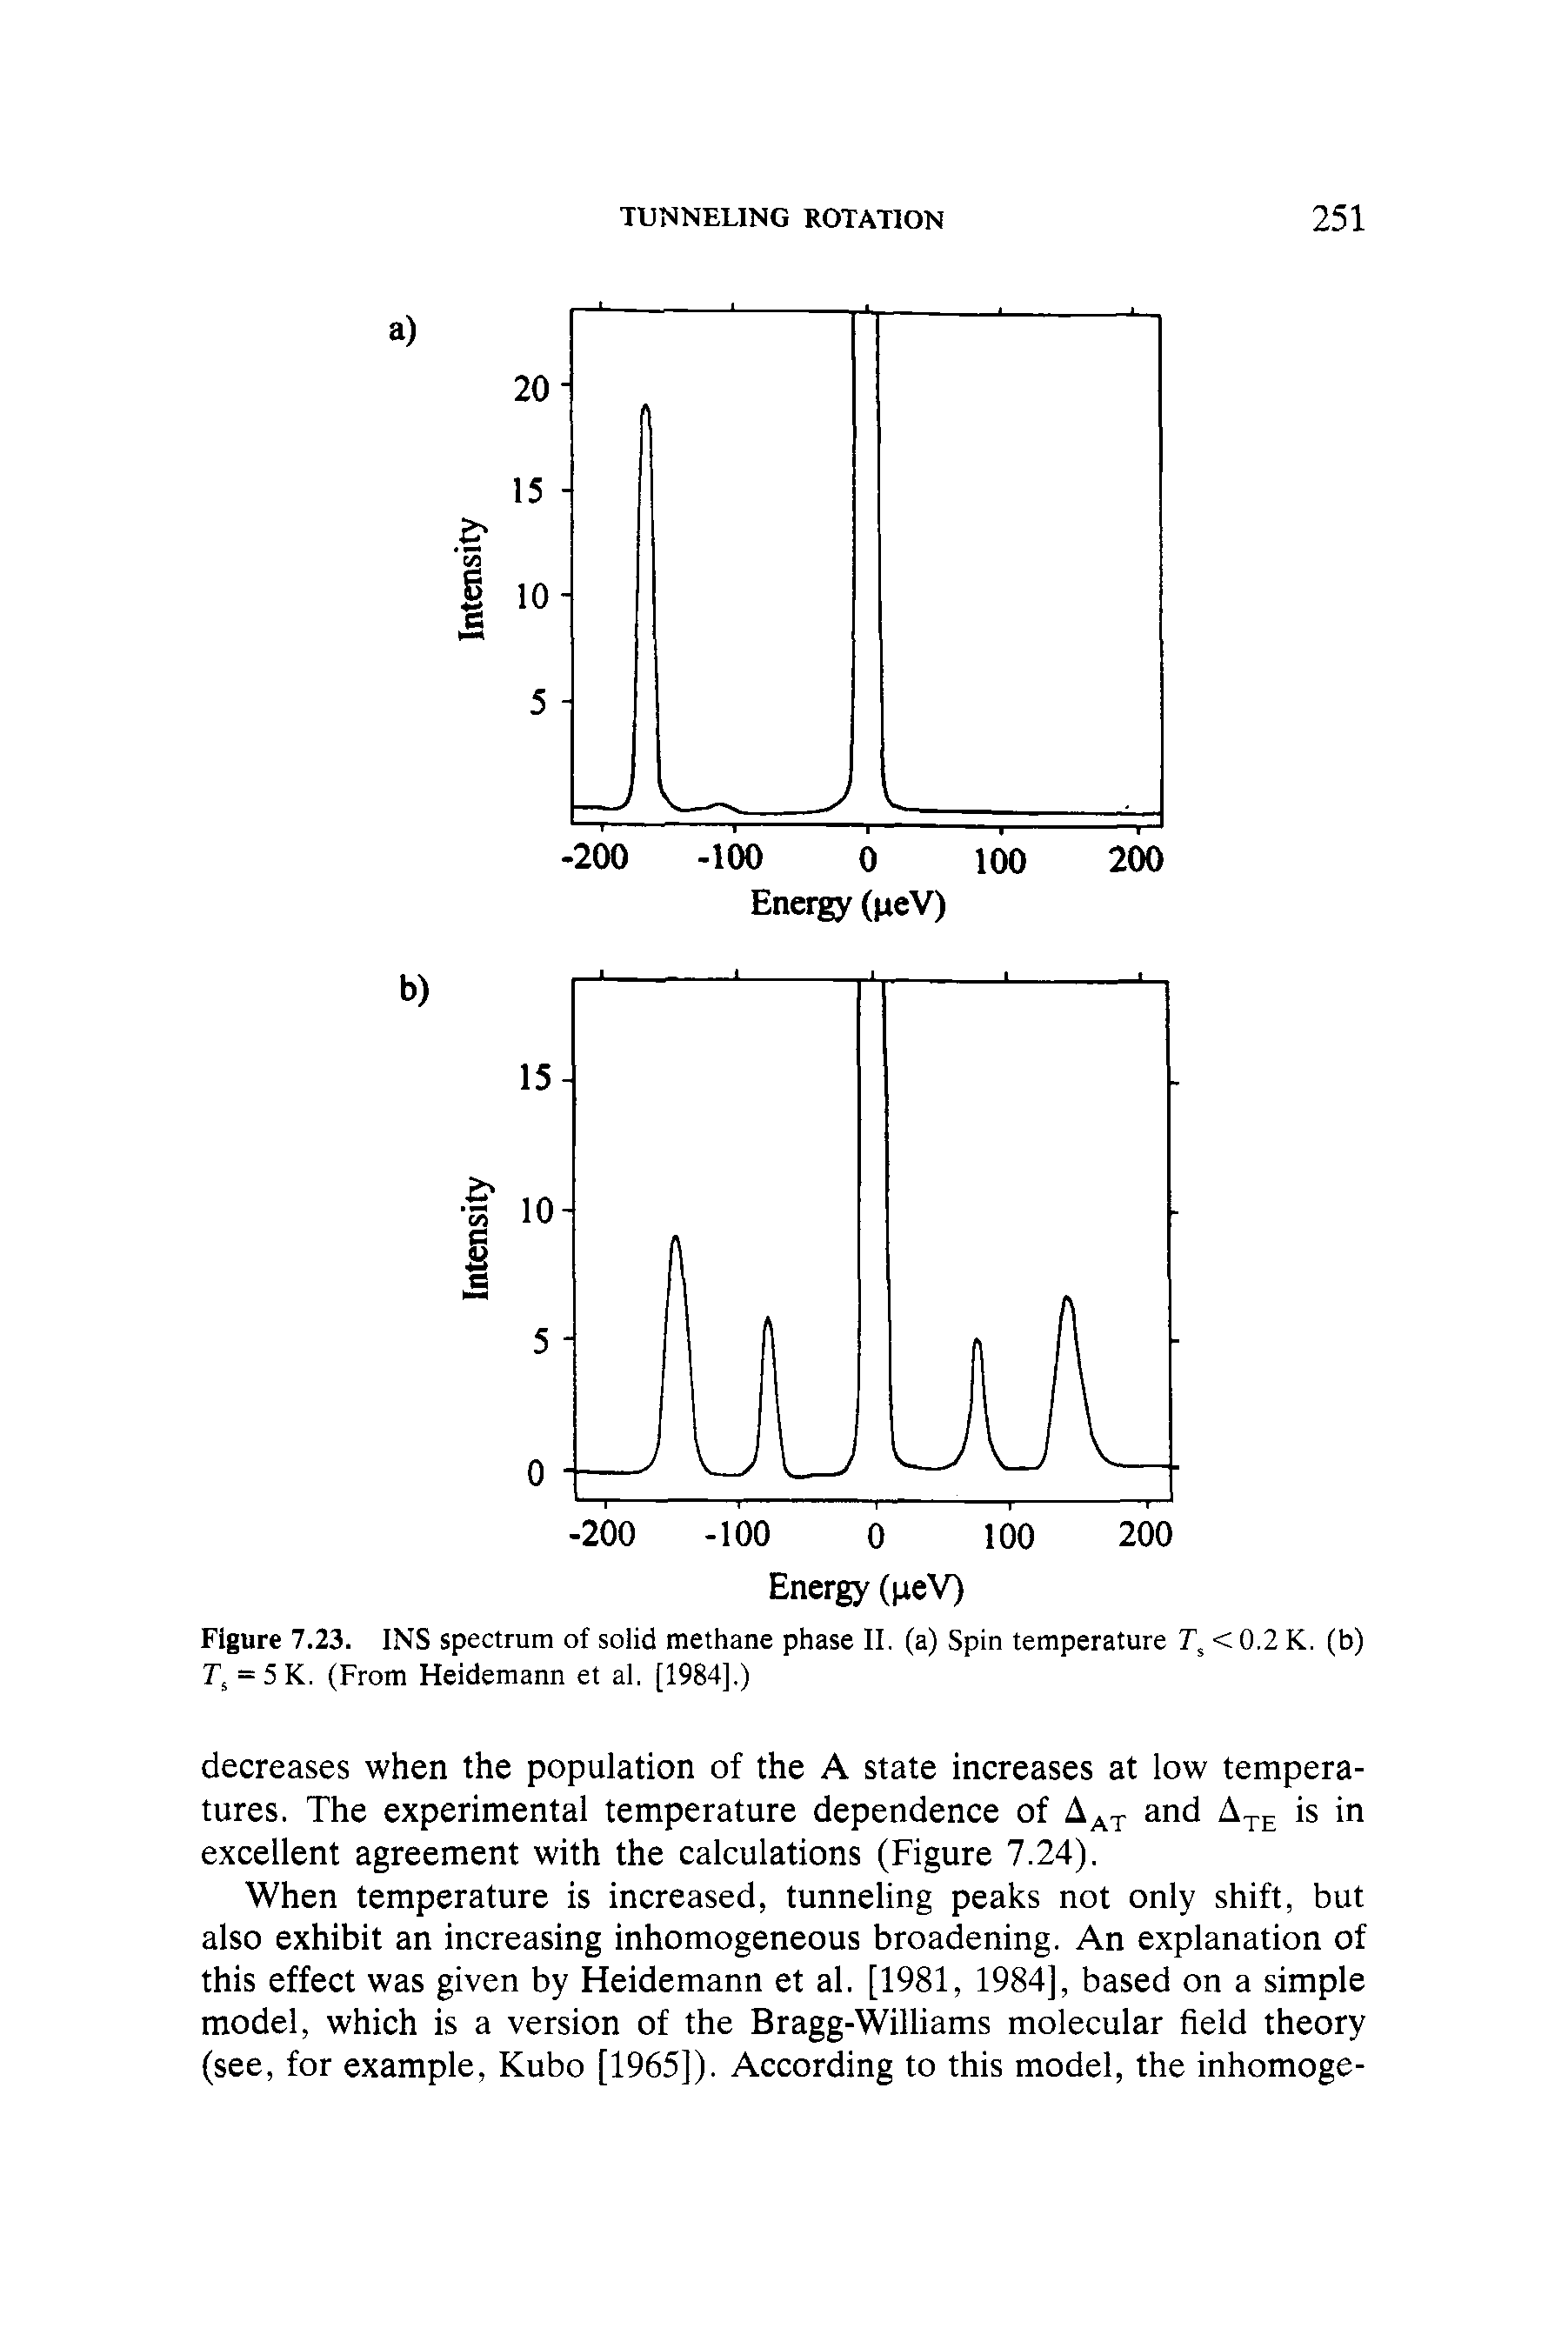 Figure 7.23. INS spectrum of solid methane phase II. (a) Spin temperature Ts <0.2 K. (b) Ts = 5K. (From Heidemann et al. [1984].)...